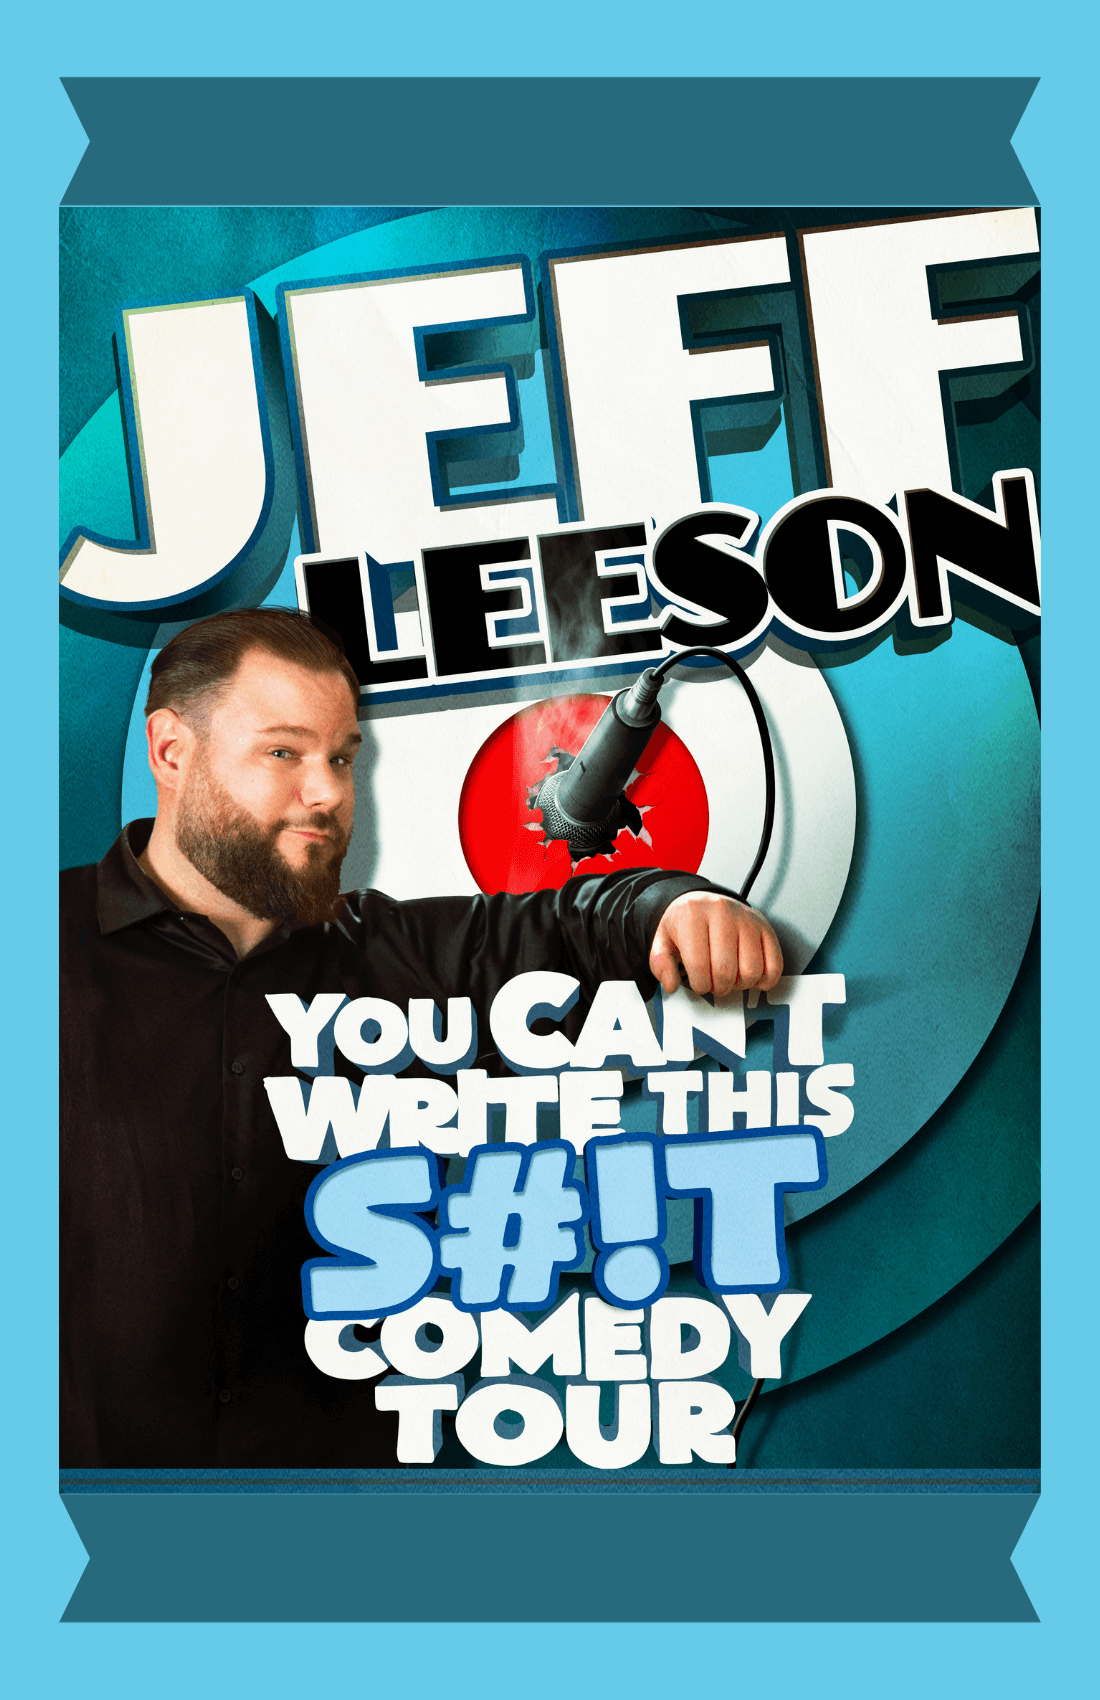 Jeff Leeson Comedy Tour